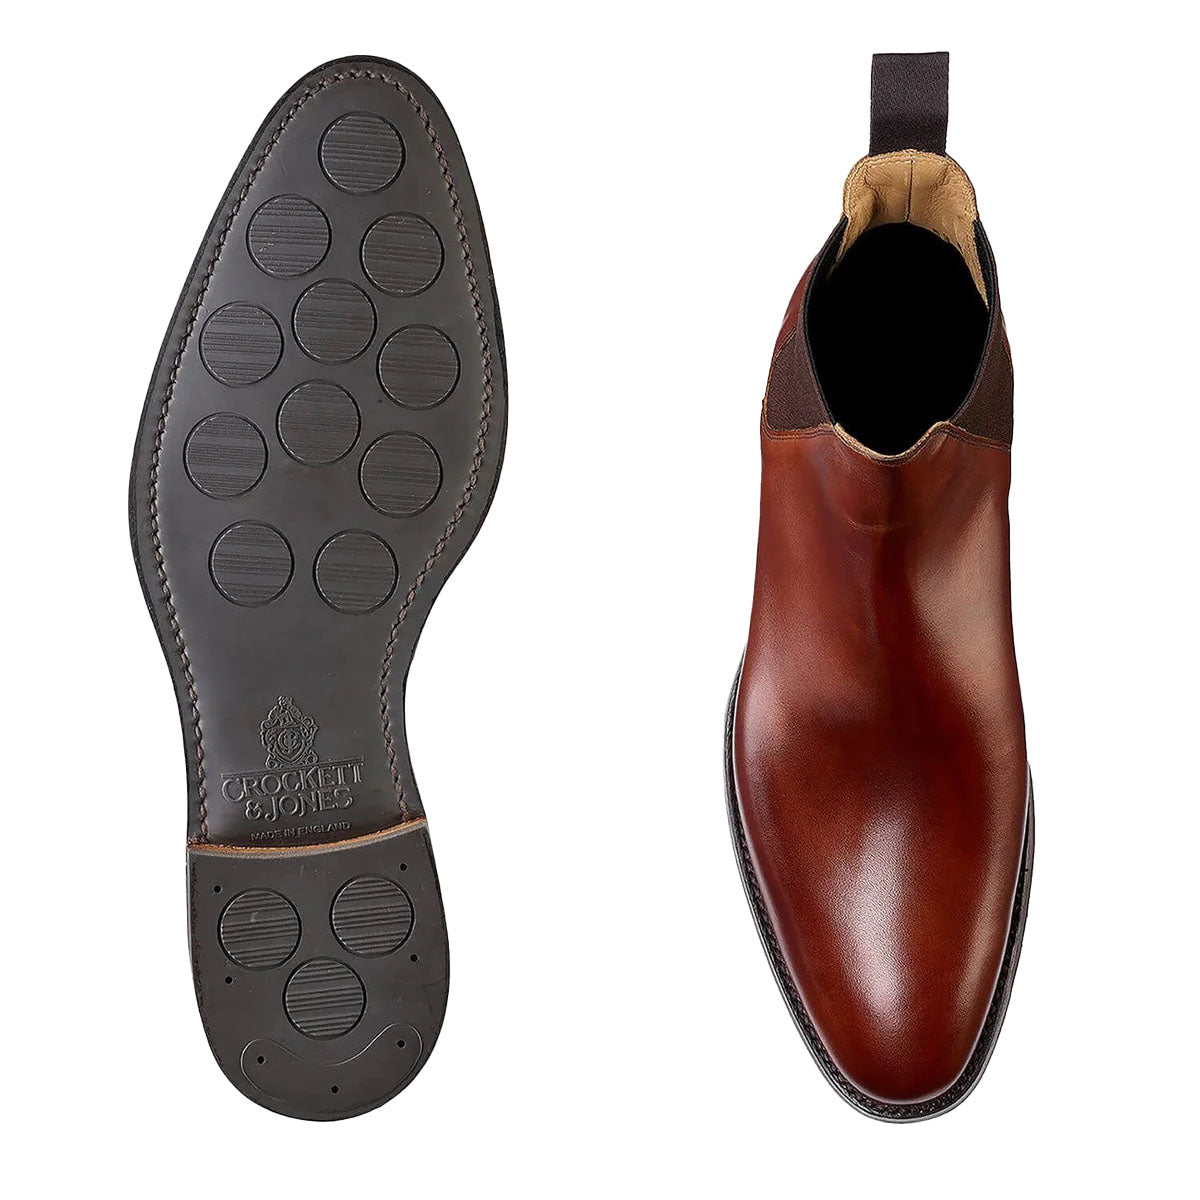 Chelsea 8 Chestnut Calf Leather Boots  Crockett & Jones   